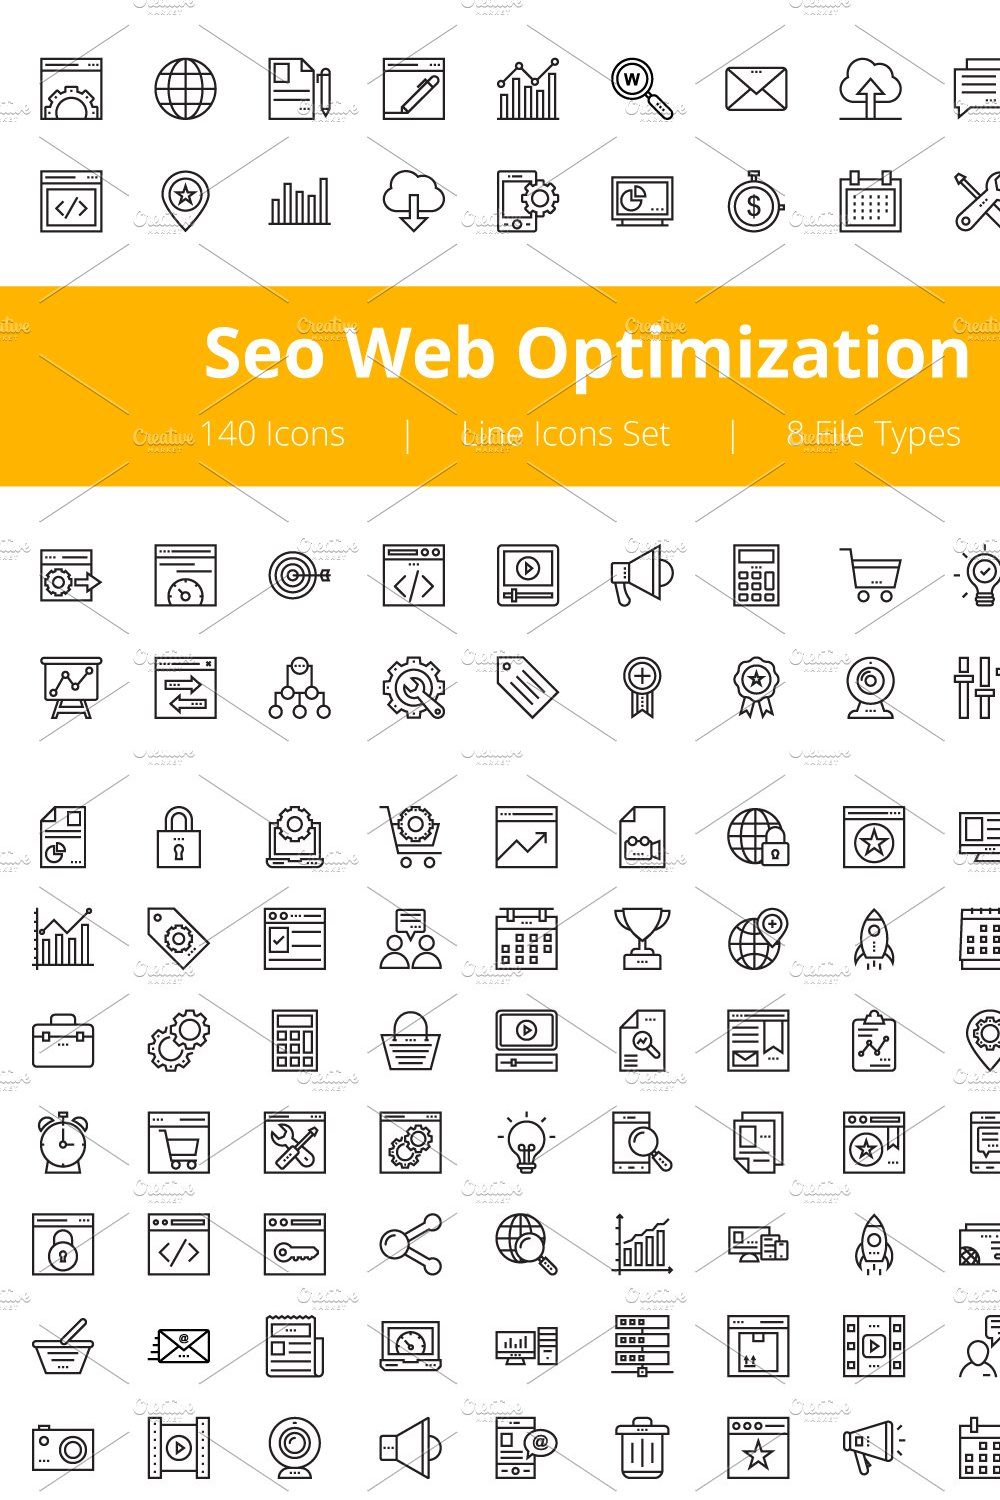 125+ Seo Web Optimization Line Icons pinterest preview image.